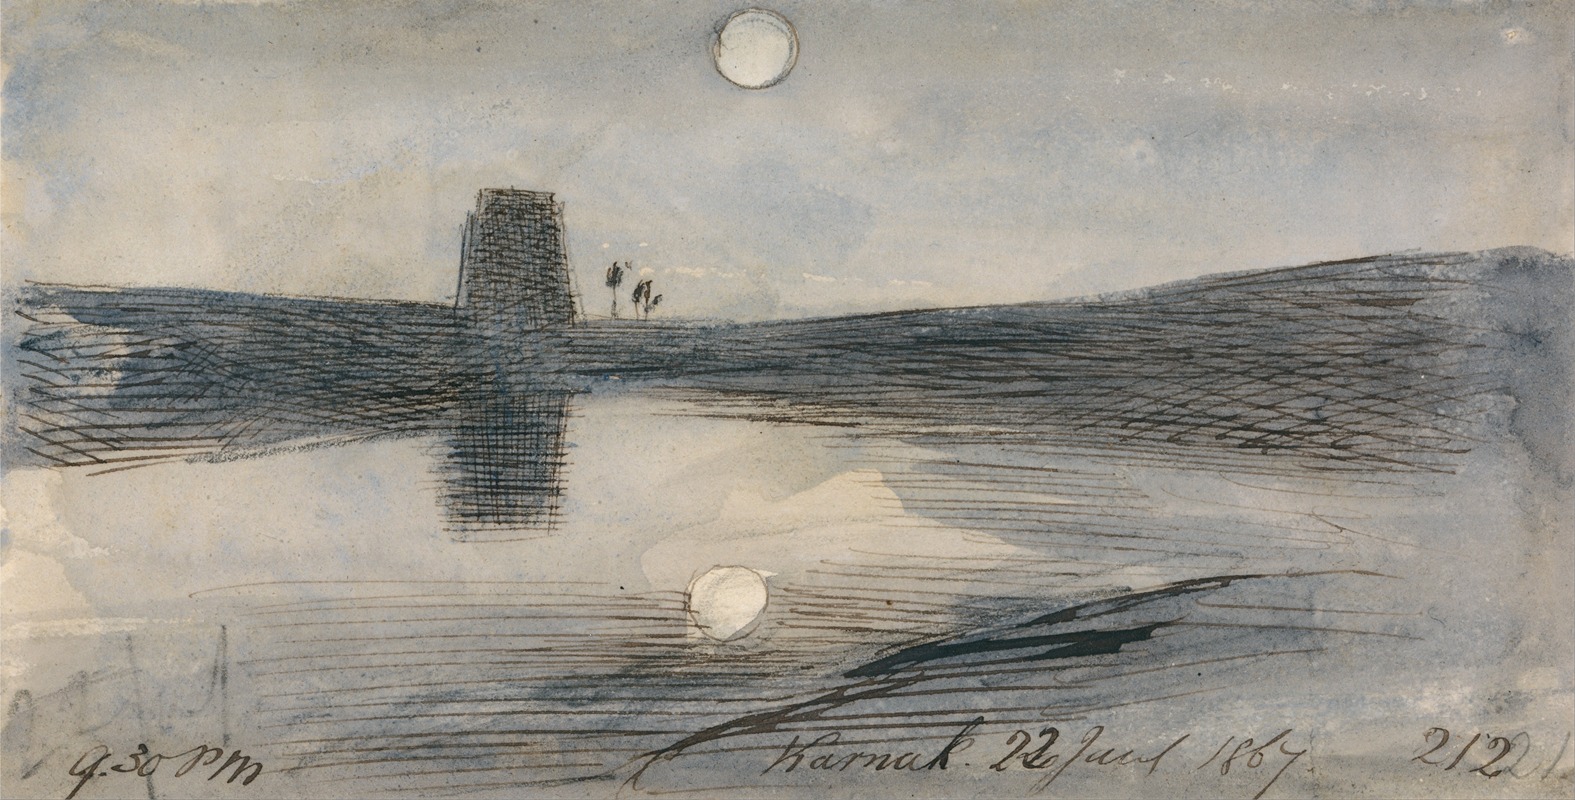 Edward Lear - Karnak, 9-30 pm, 22 January 1867